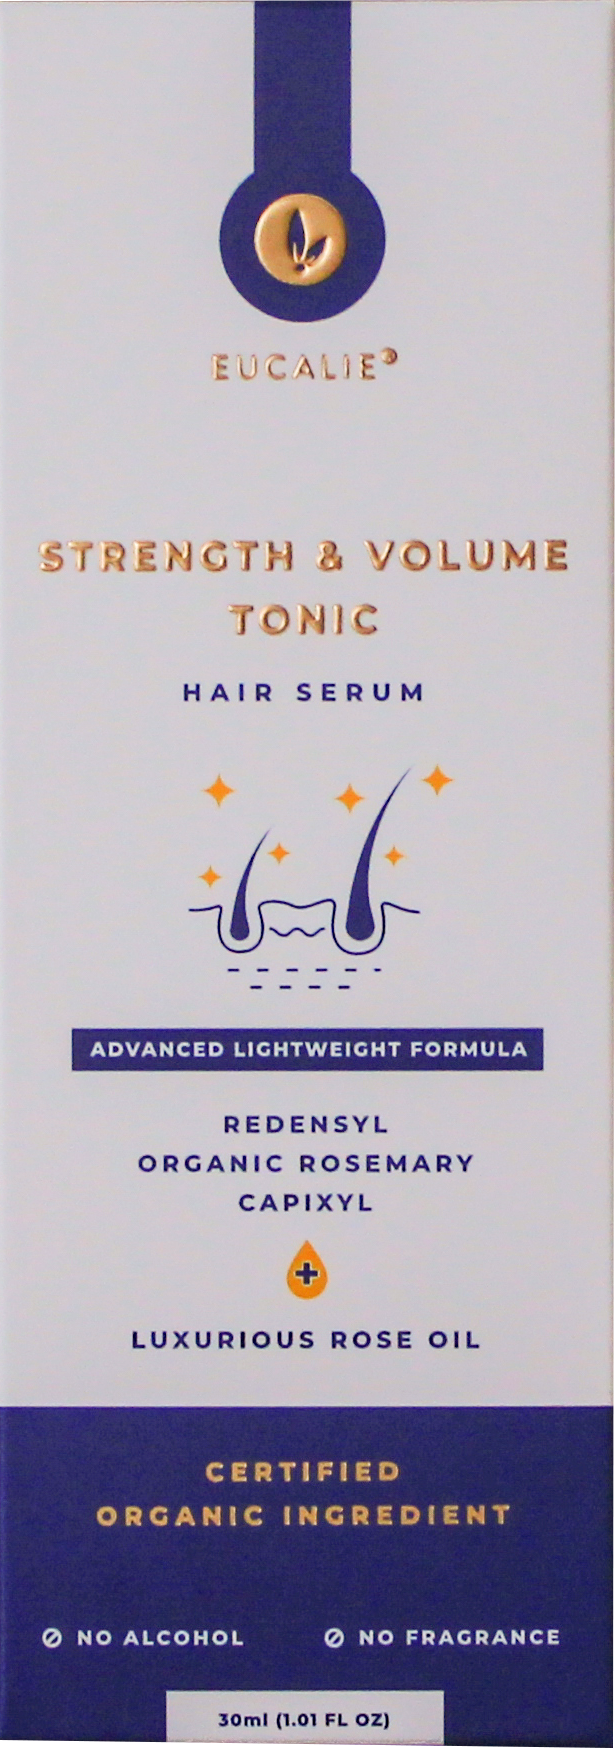 Eucalie Hair Growth/Anti Hair Fall Tonic Organic Serum - Strength & Volume - 3